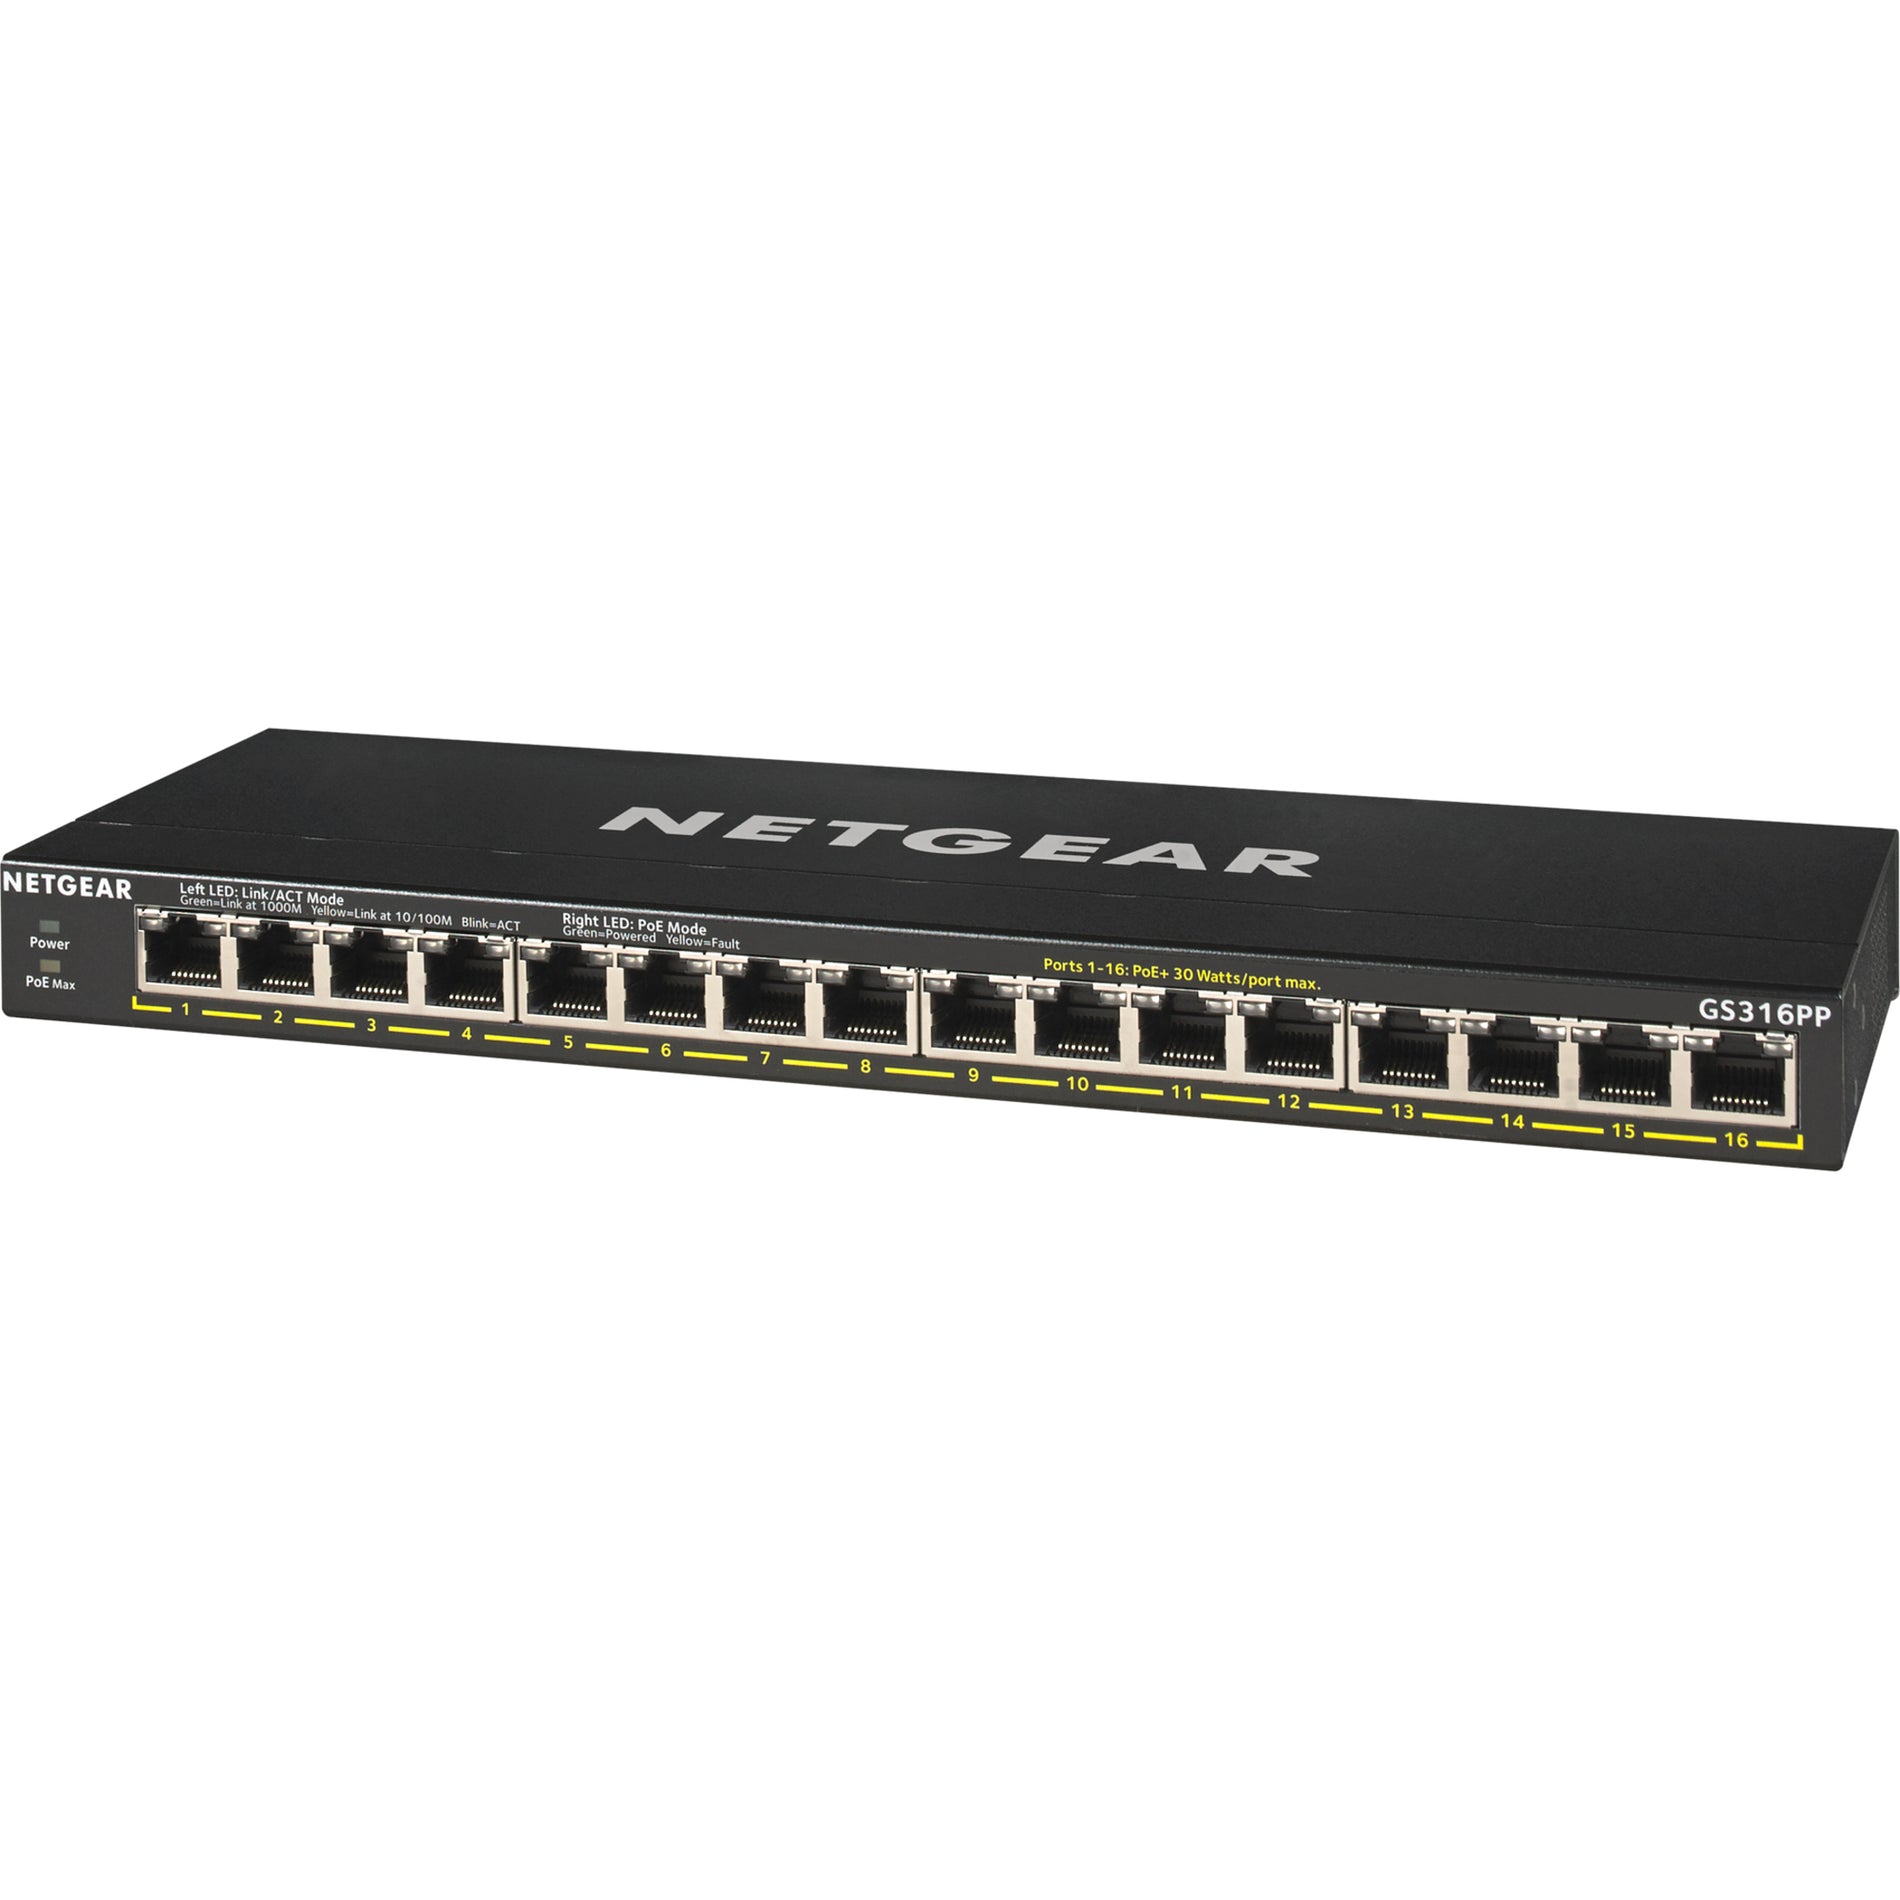 Netgear GS316PP-100NAS GS316PP Ethernet Switch, 16 Port Gigabit Ethernet PoE+, 3 Year Lifetime Warranty